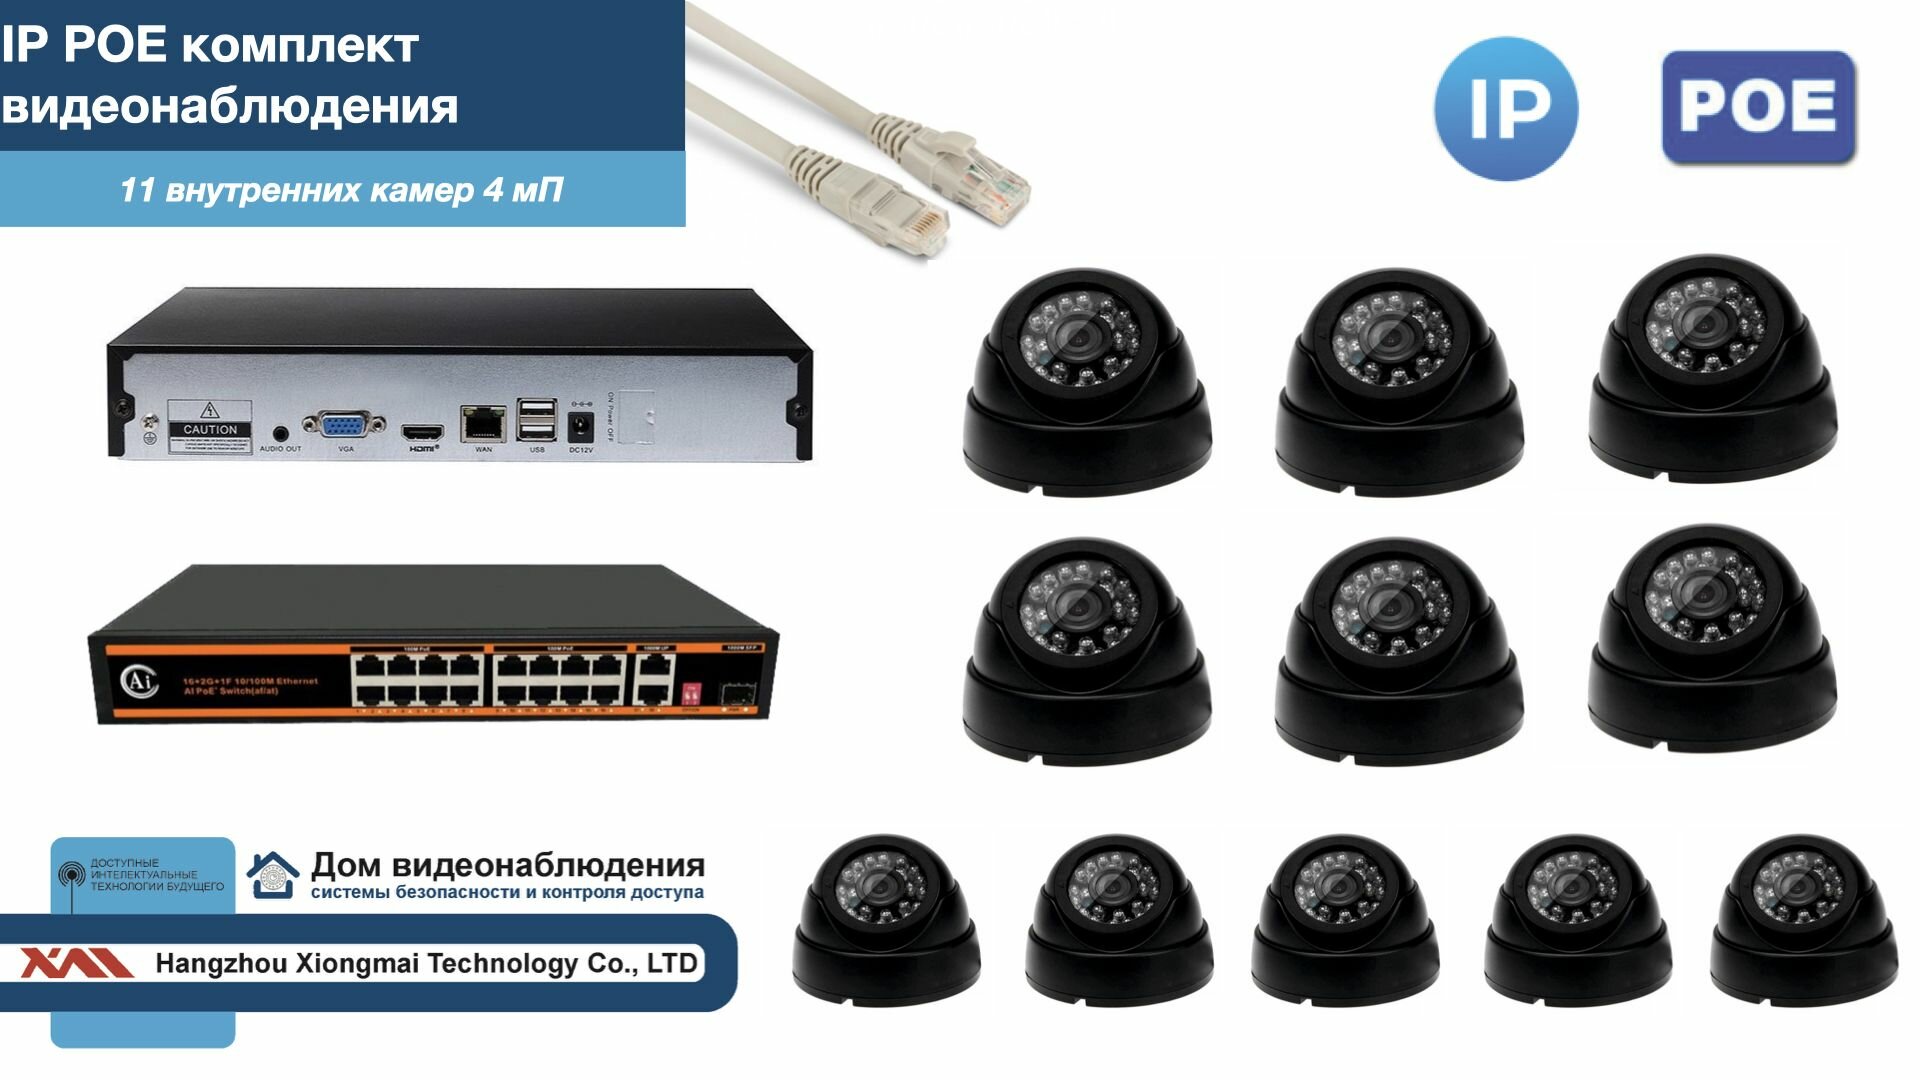 Полный IP POE комплект видеонаблюдения на 11 камер (KIT11IPPOE300B4MP)